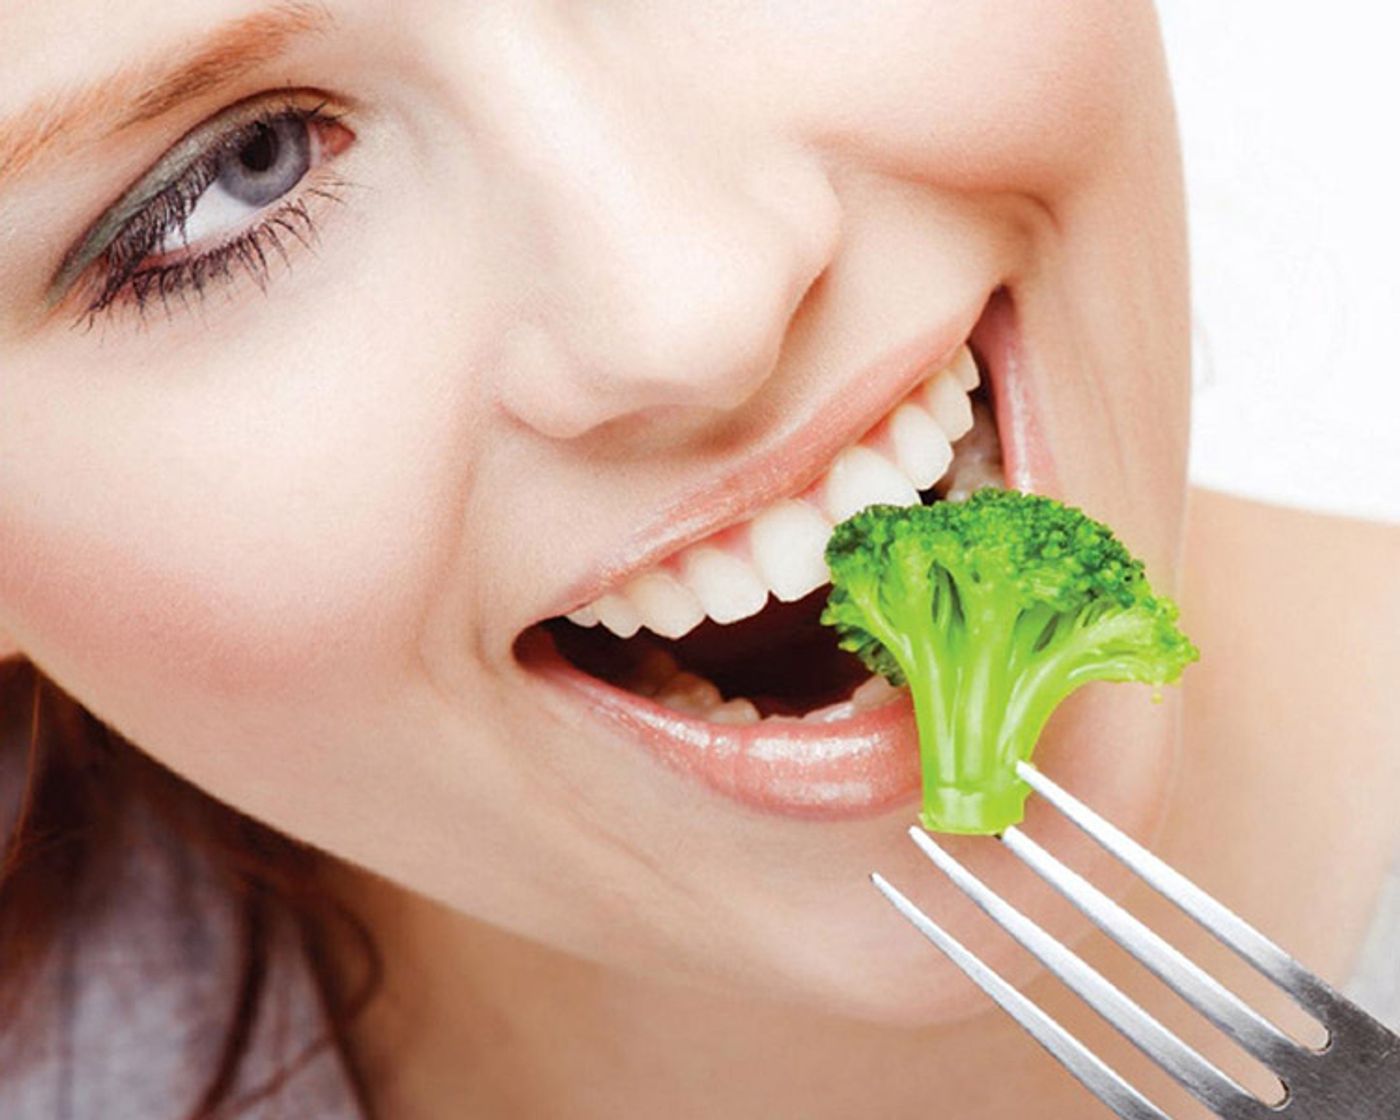 woman eating broccoli, credit: iowagirlseat.com